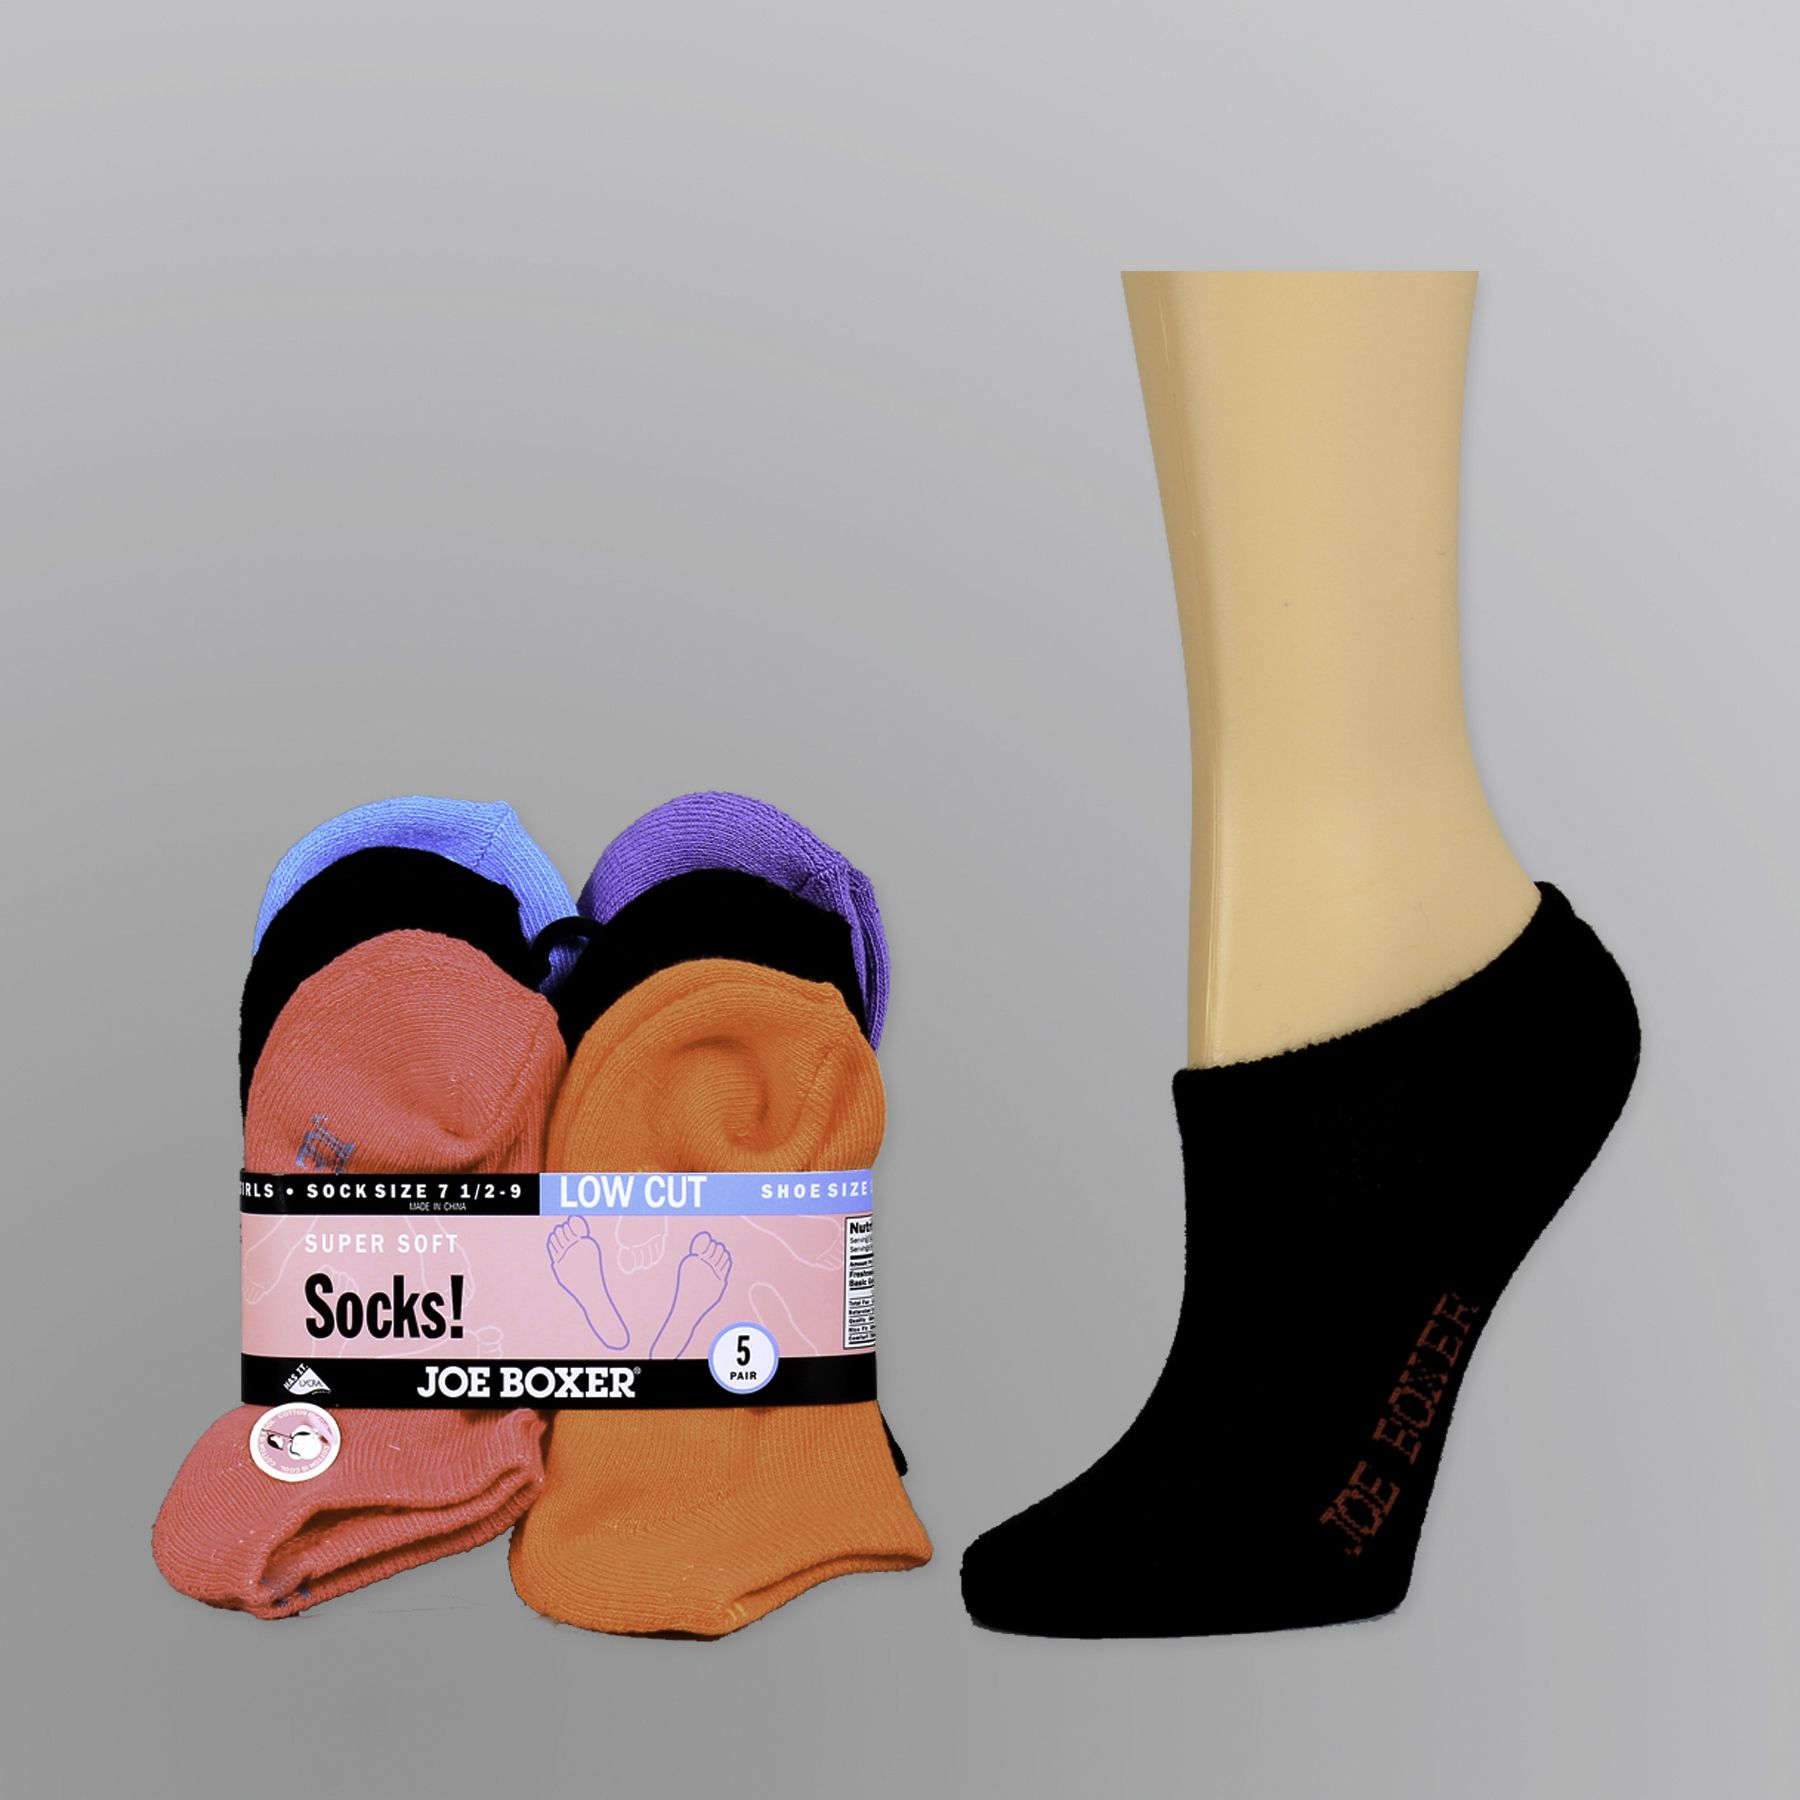 Joe Boxer Girl&#8217;s Socks 5pk Low Cut Super Soft Multicolored